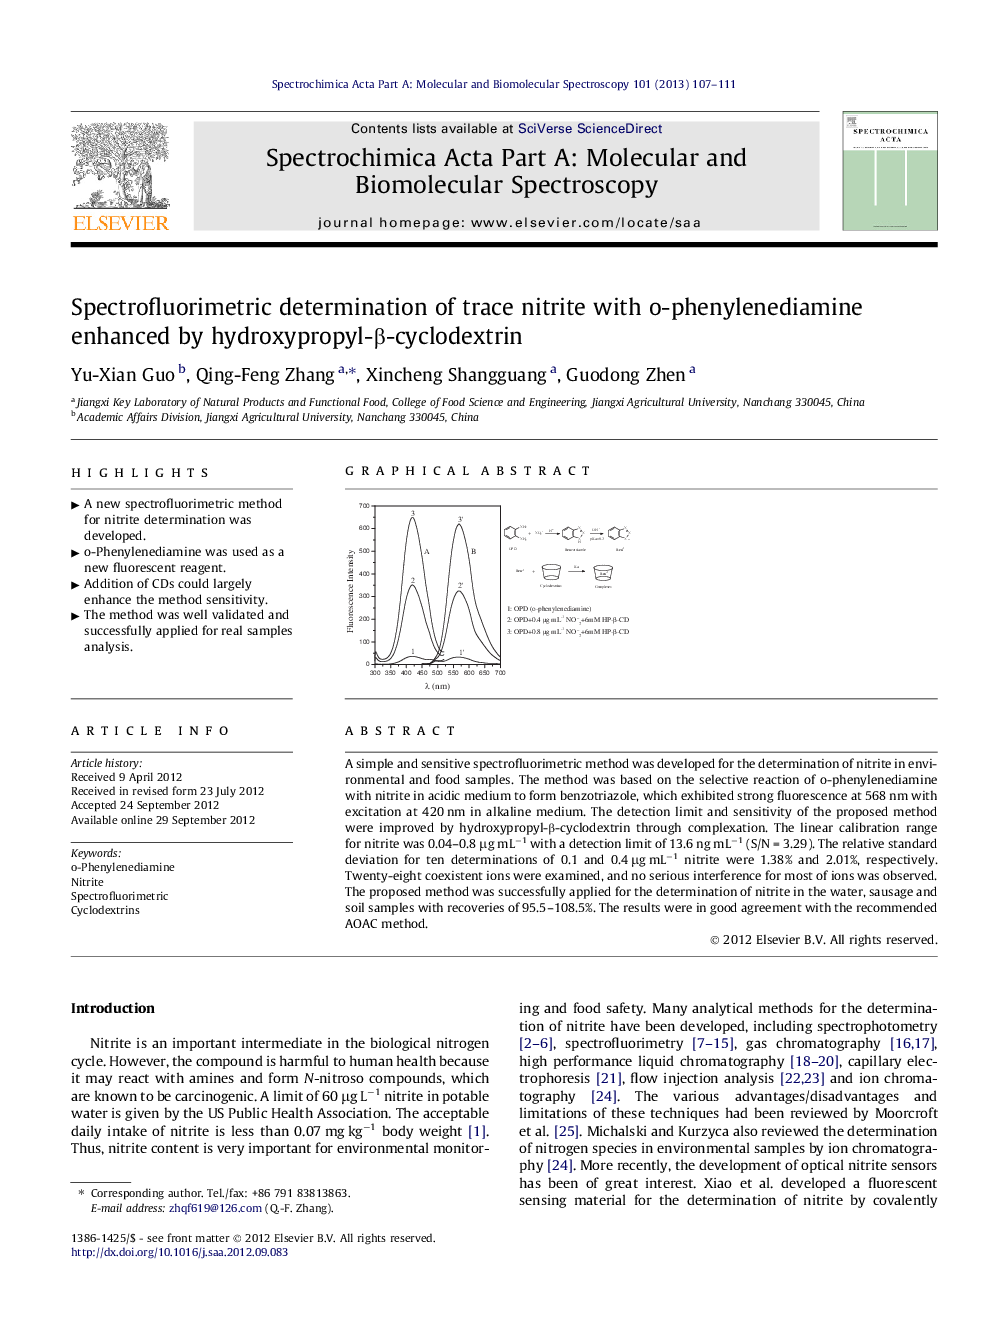 Spectrofluorimetric determination of trace nitrite with o-phenylenediamine enhanced by hydroxypropyl-β-cyclodextrin